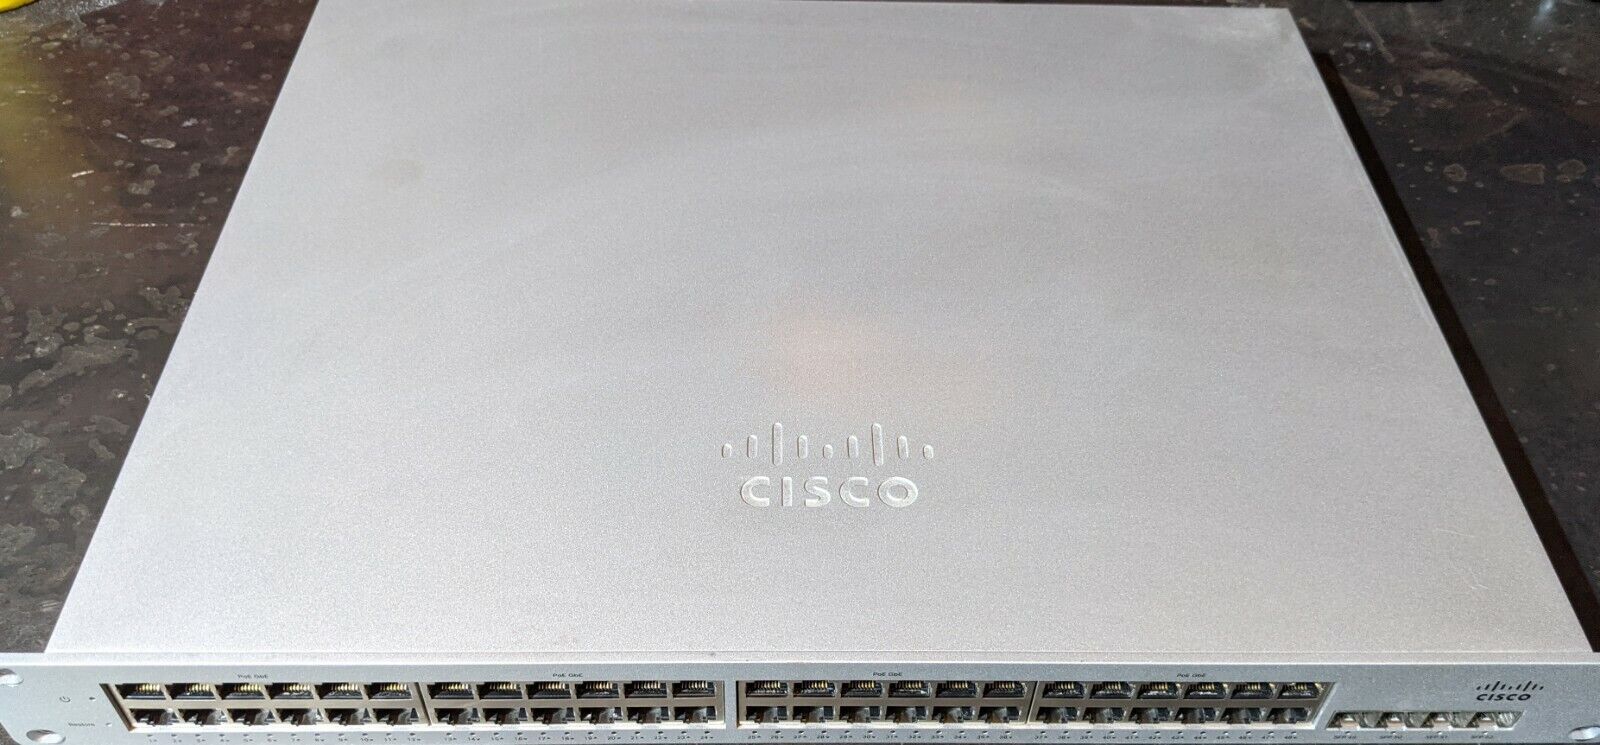 Cisco Meraki  MS220-48LP-HW Rack-Mount Managed Switch UNCLAIMED no license